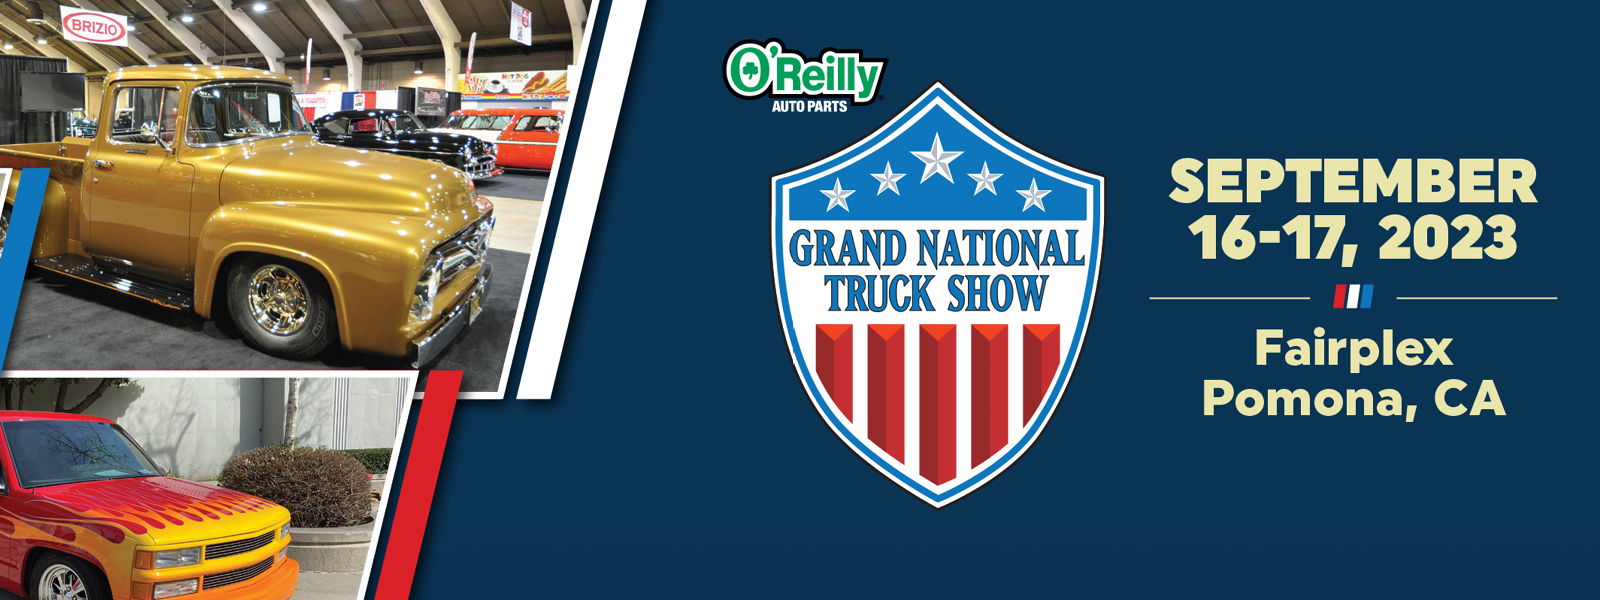 Grand National Truck Show Fairplex